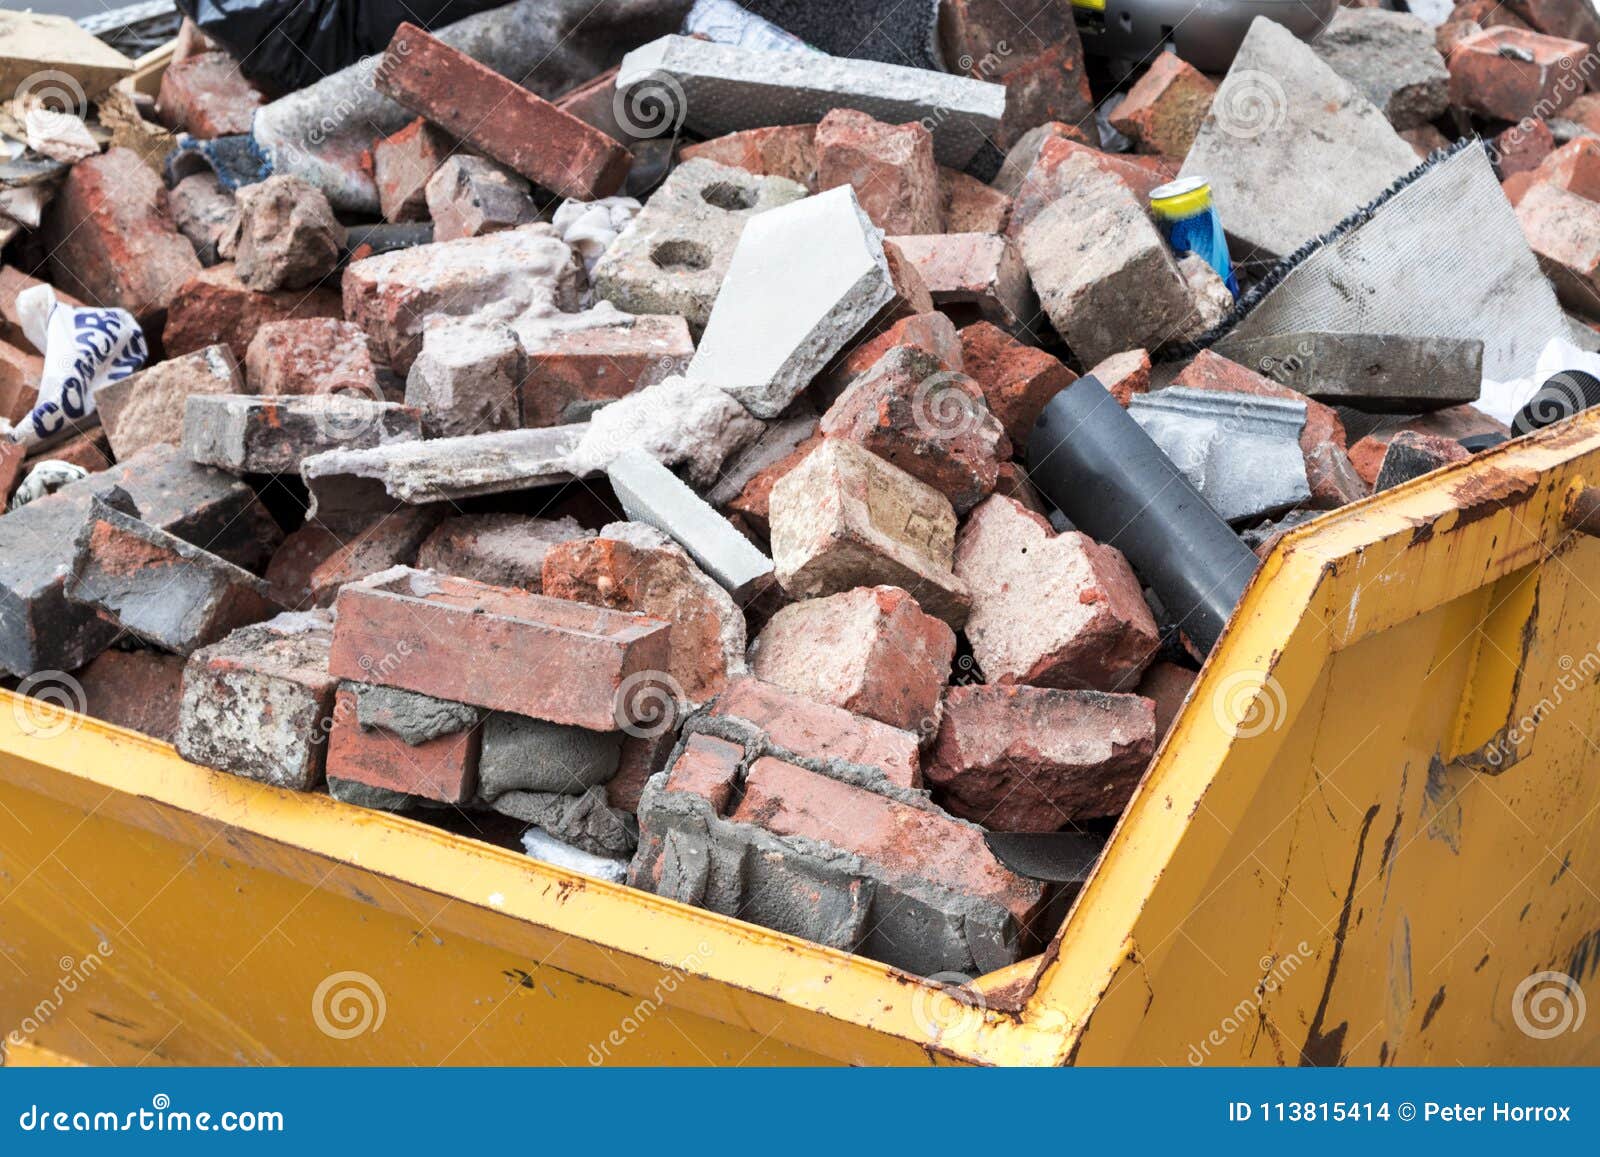 yellow dumpster skip full of masonry waste